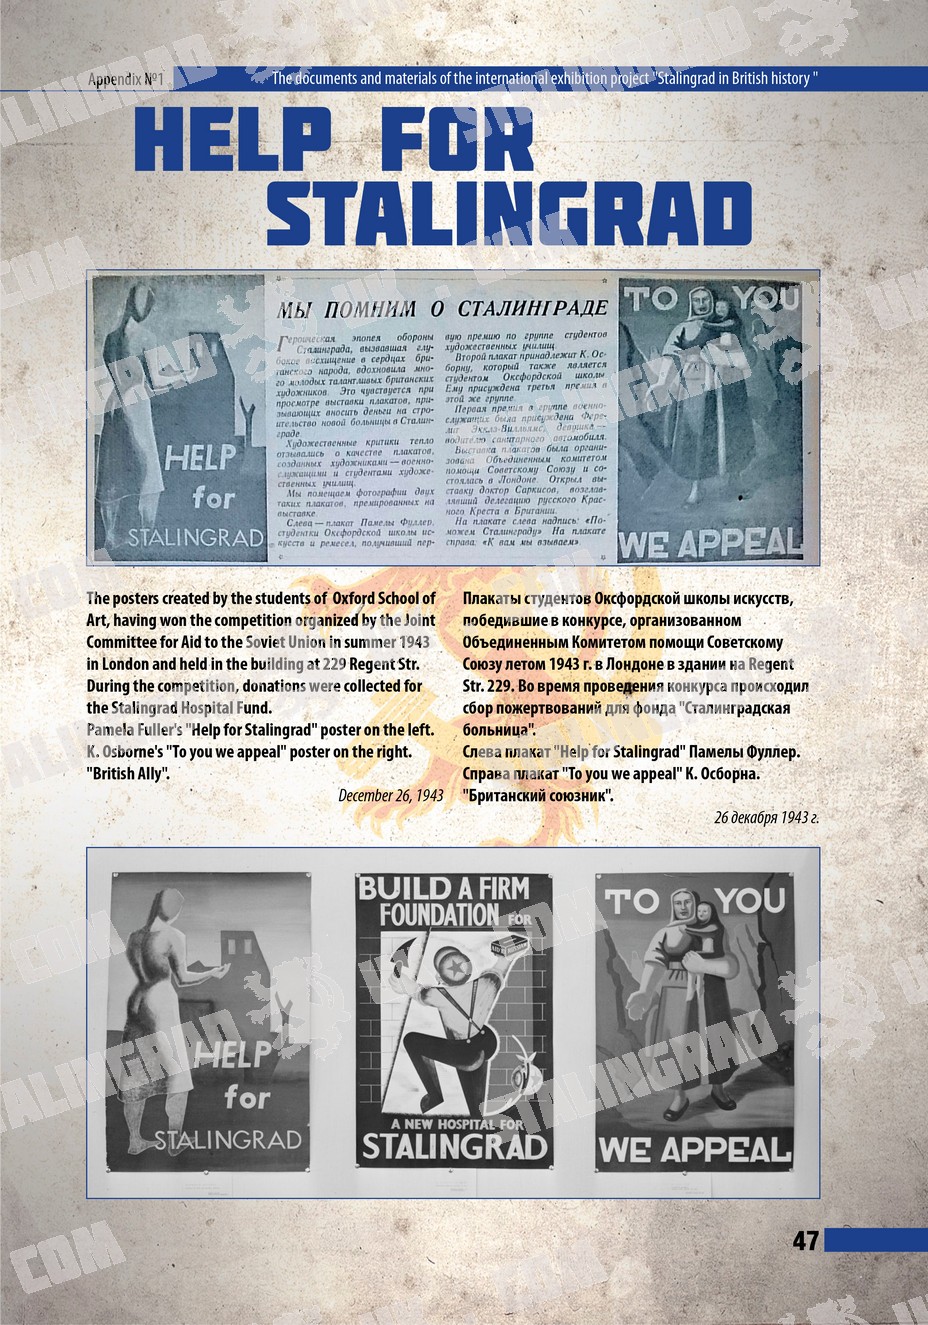 Catalog. Stalingrad in British history. 2020.